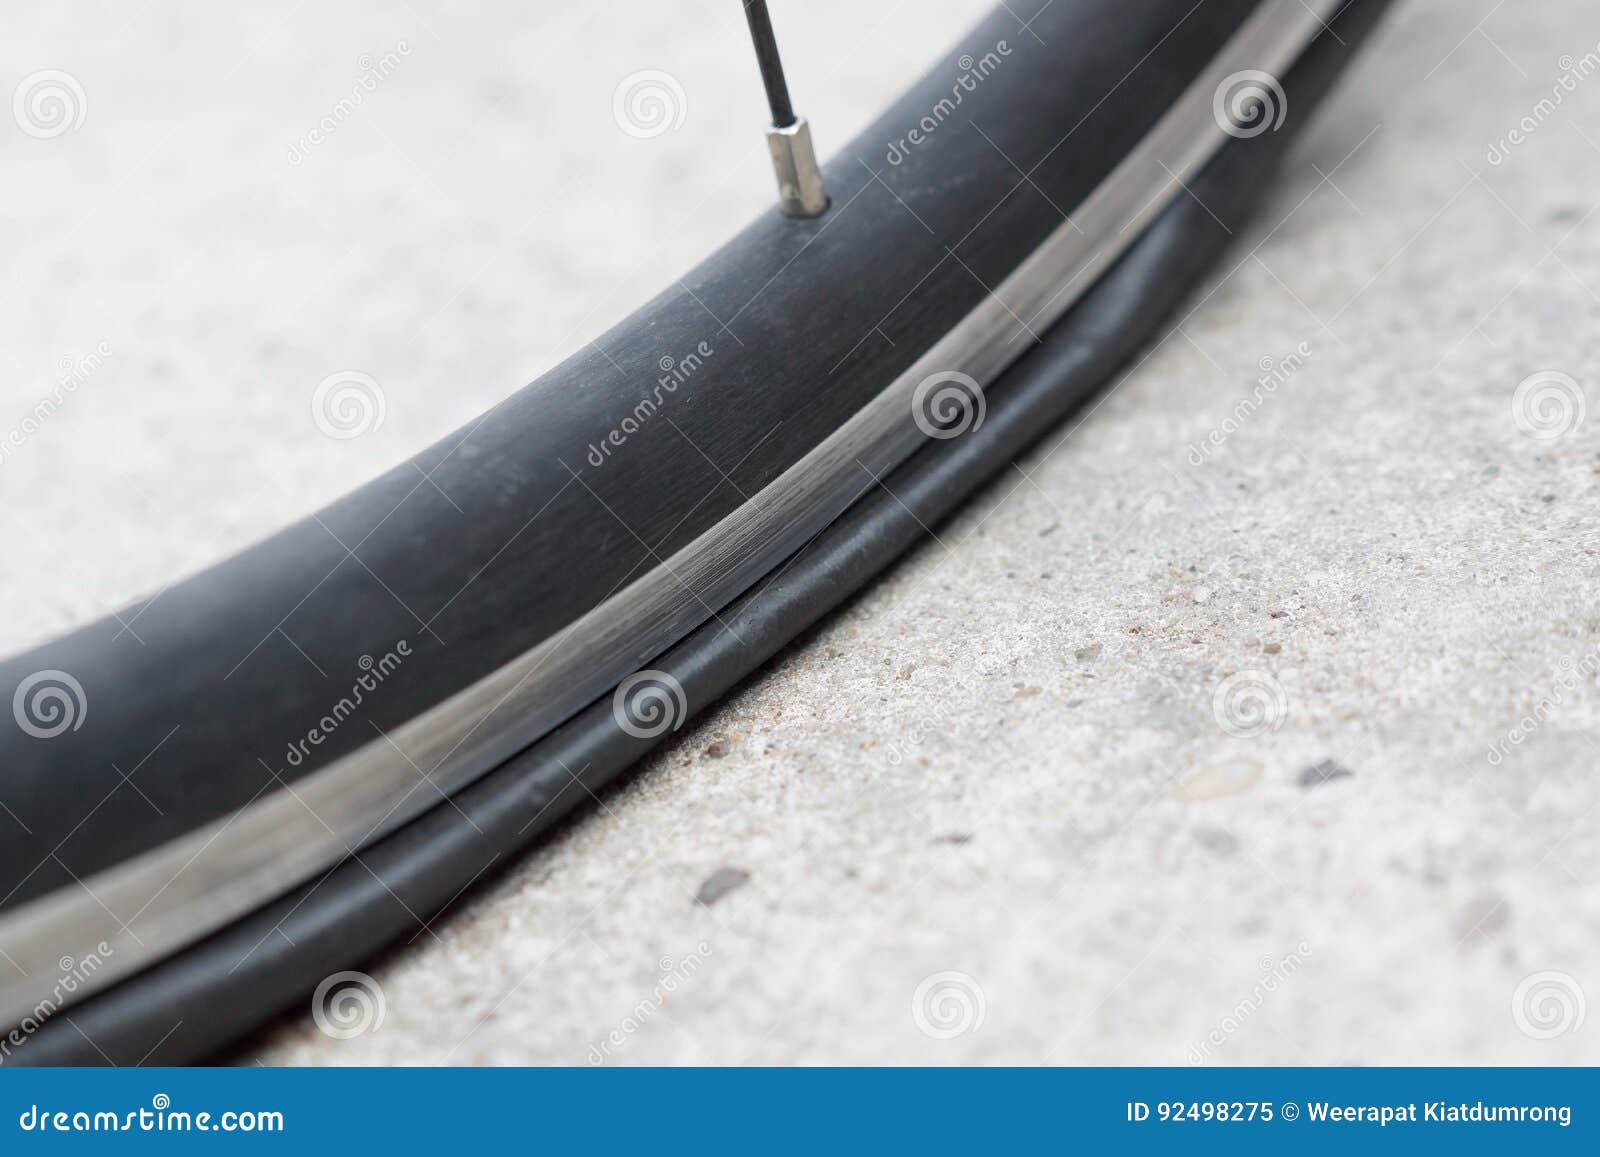 road bike puncture